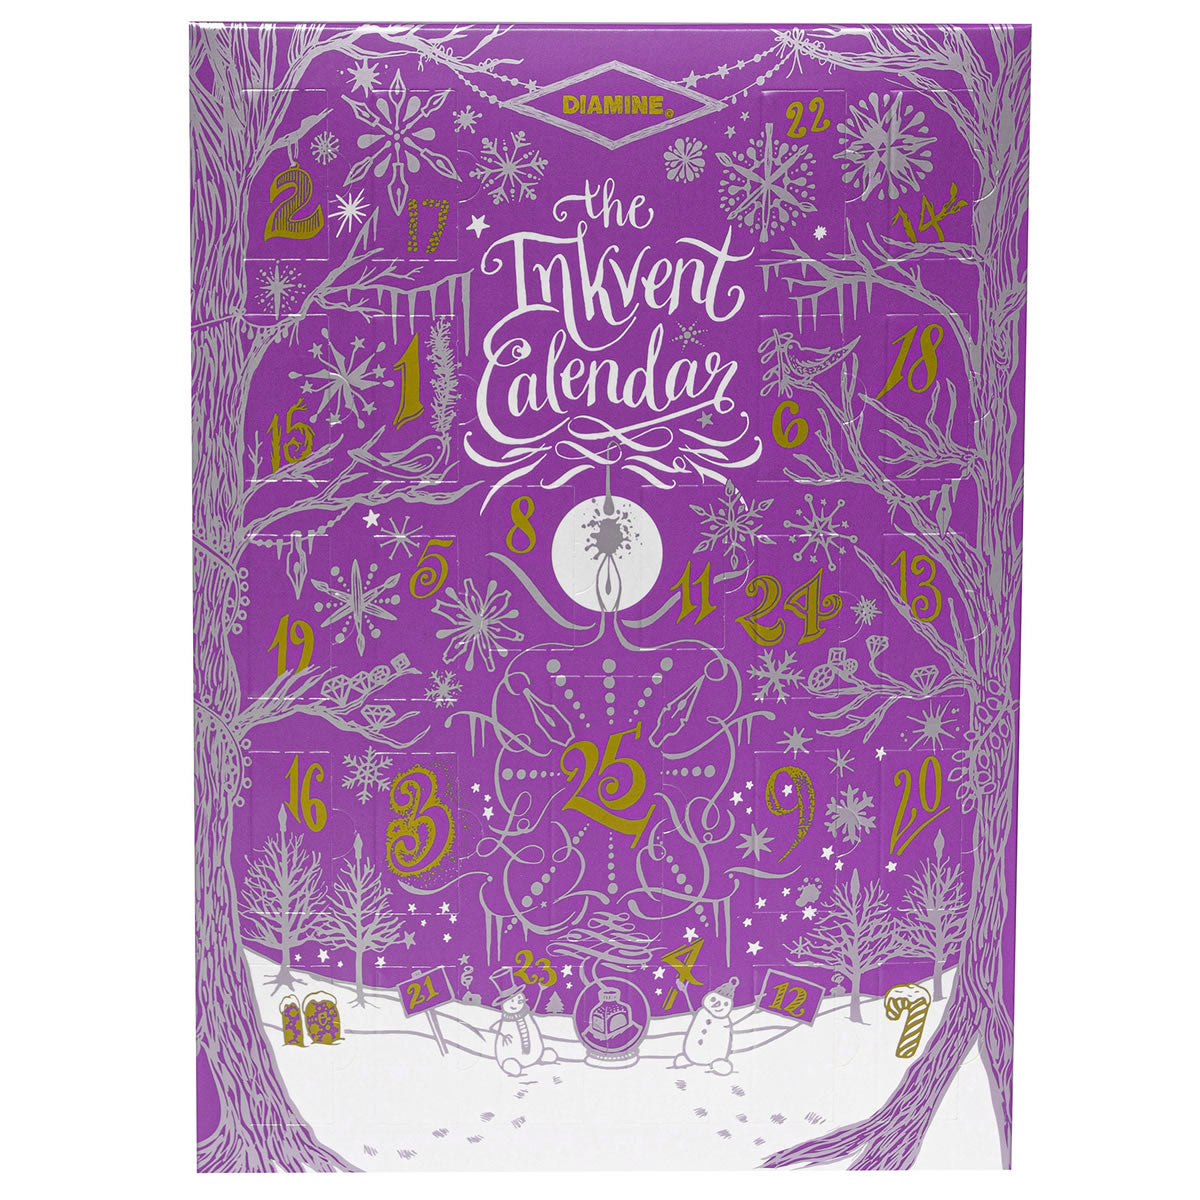 Diamine Ink-vent Calendar 2023 - Purple Edition